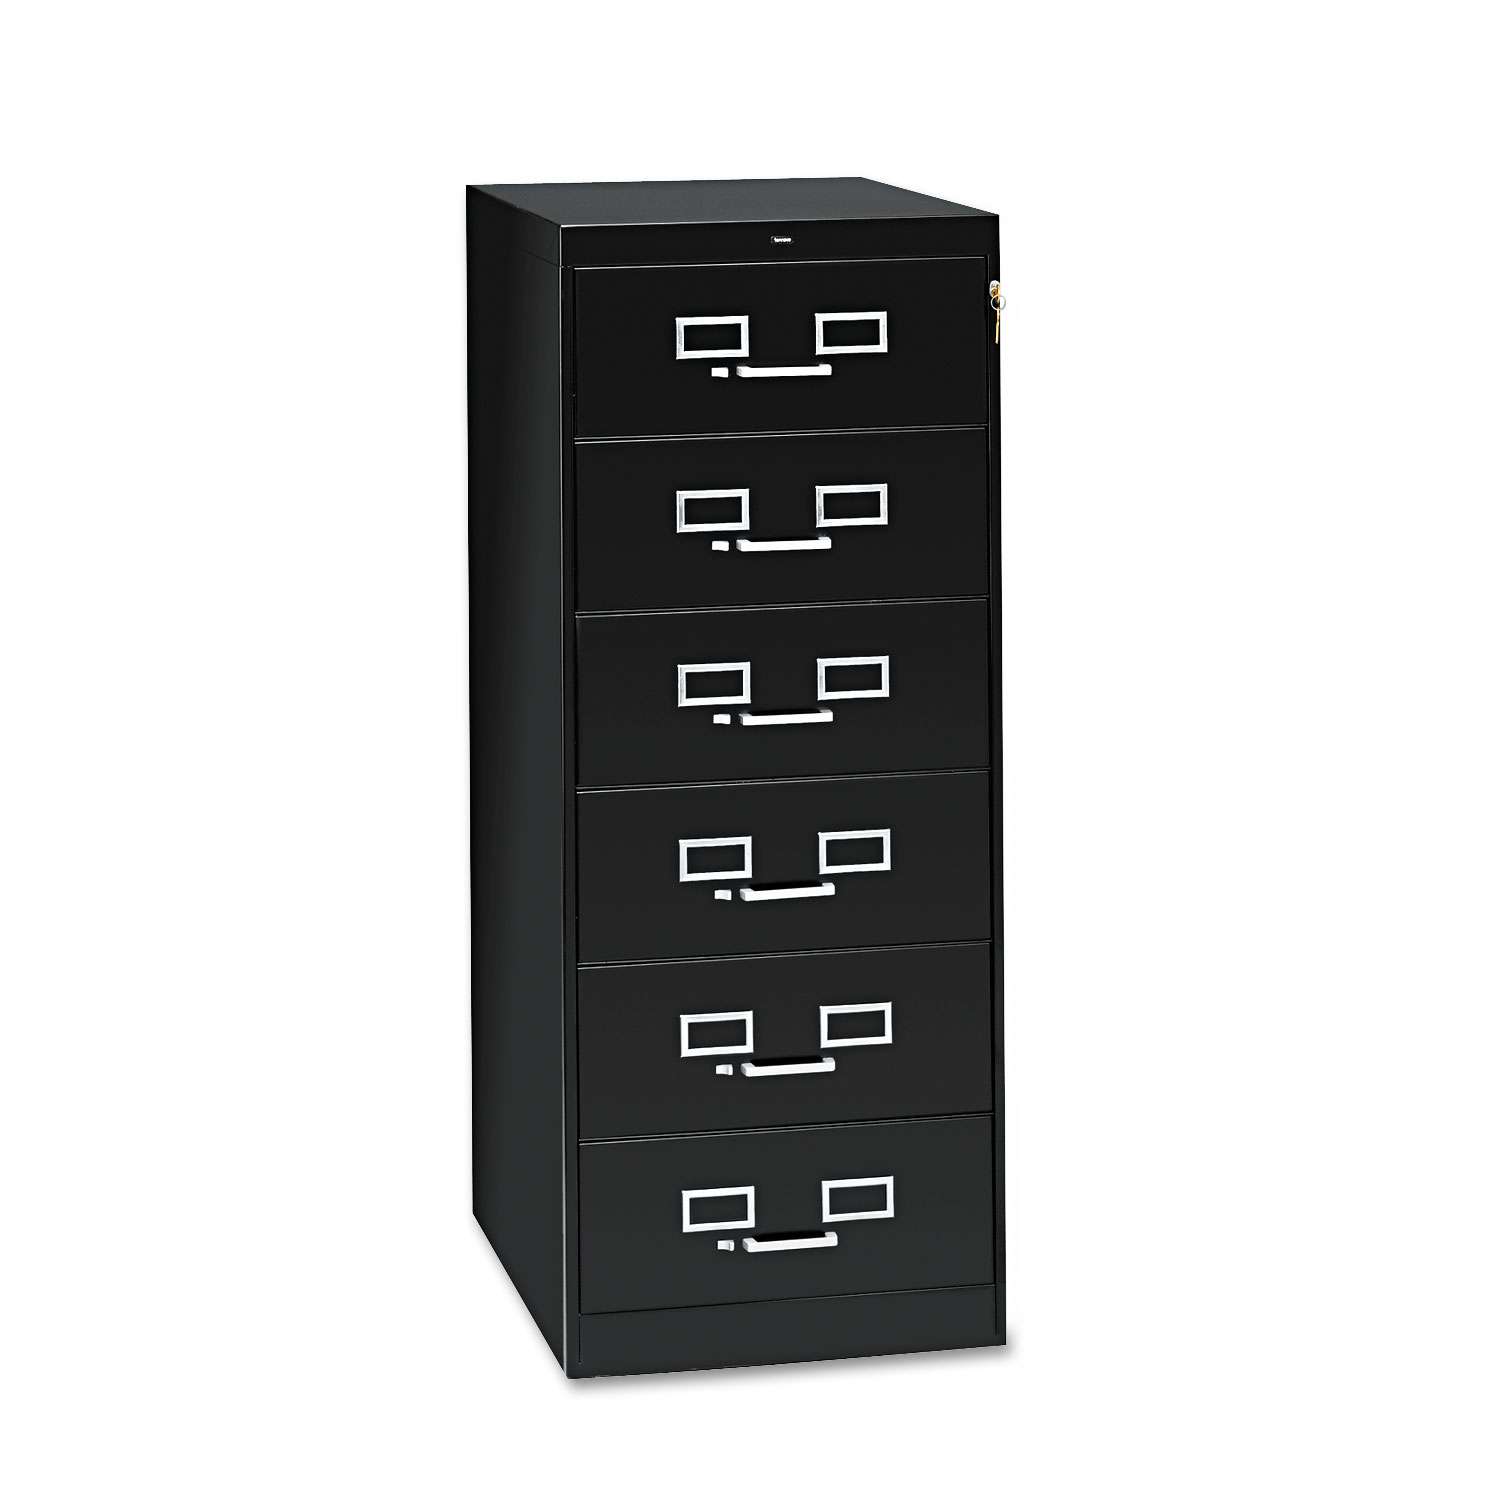  Tennsco CF-669BK Six-Drawer Multimedia Cabinet for 6 x 9 Cards, 21.25w x 28.5d x 52h, Black (TNNCF669BK) 